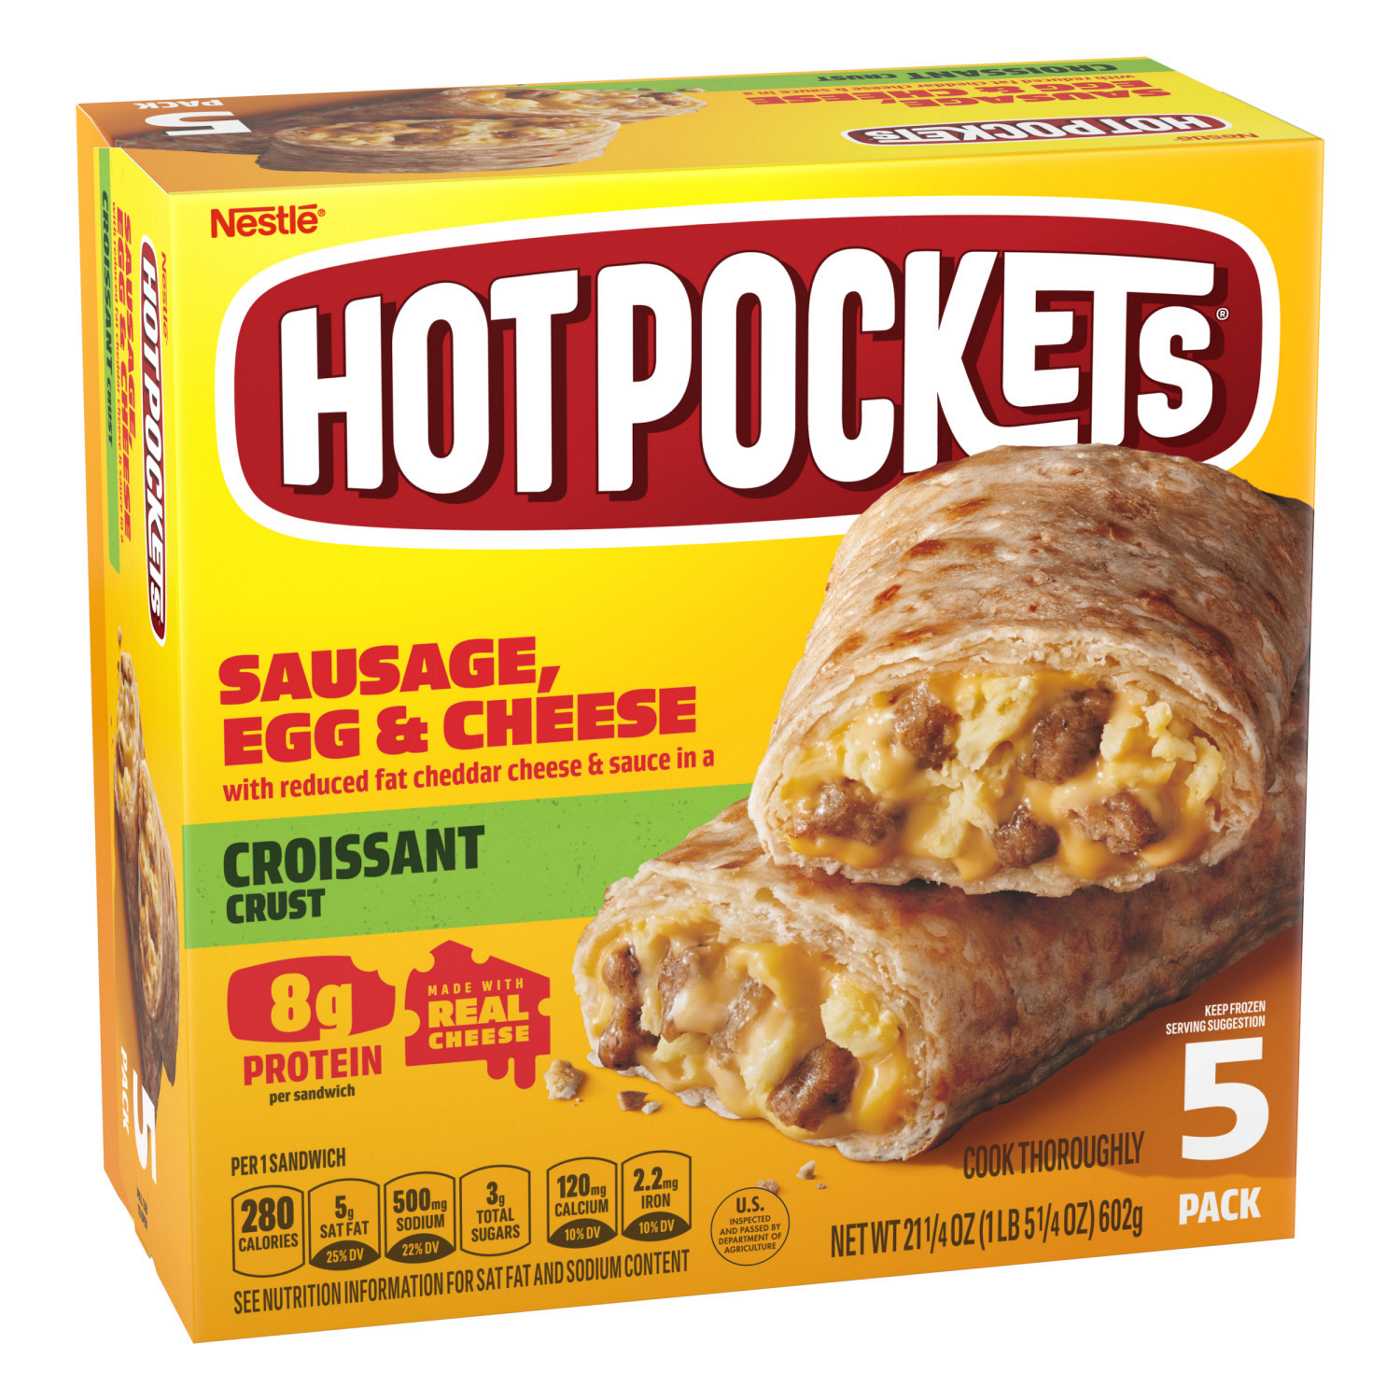 Hot Pockets Sausage Egg & Cheese Croissant Crust Frozen Sandwiches - Shop  Sandwiches at H-E-B